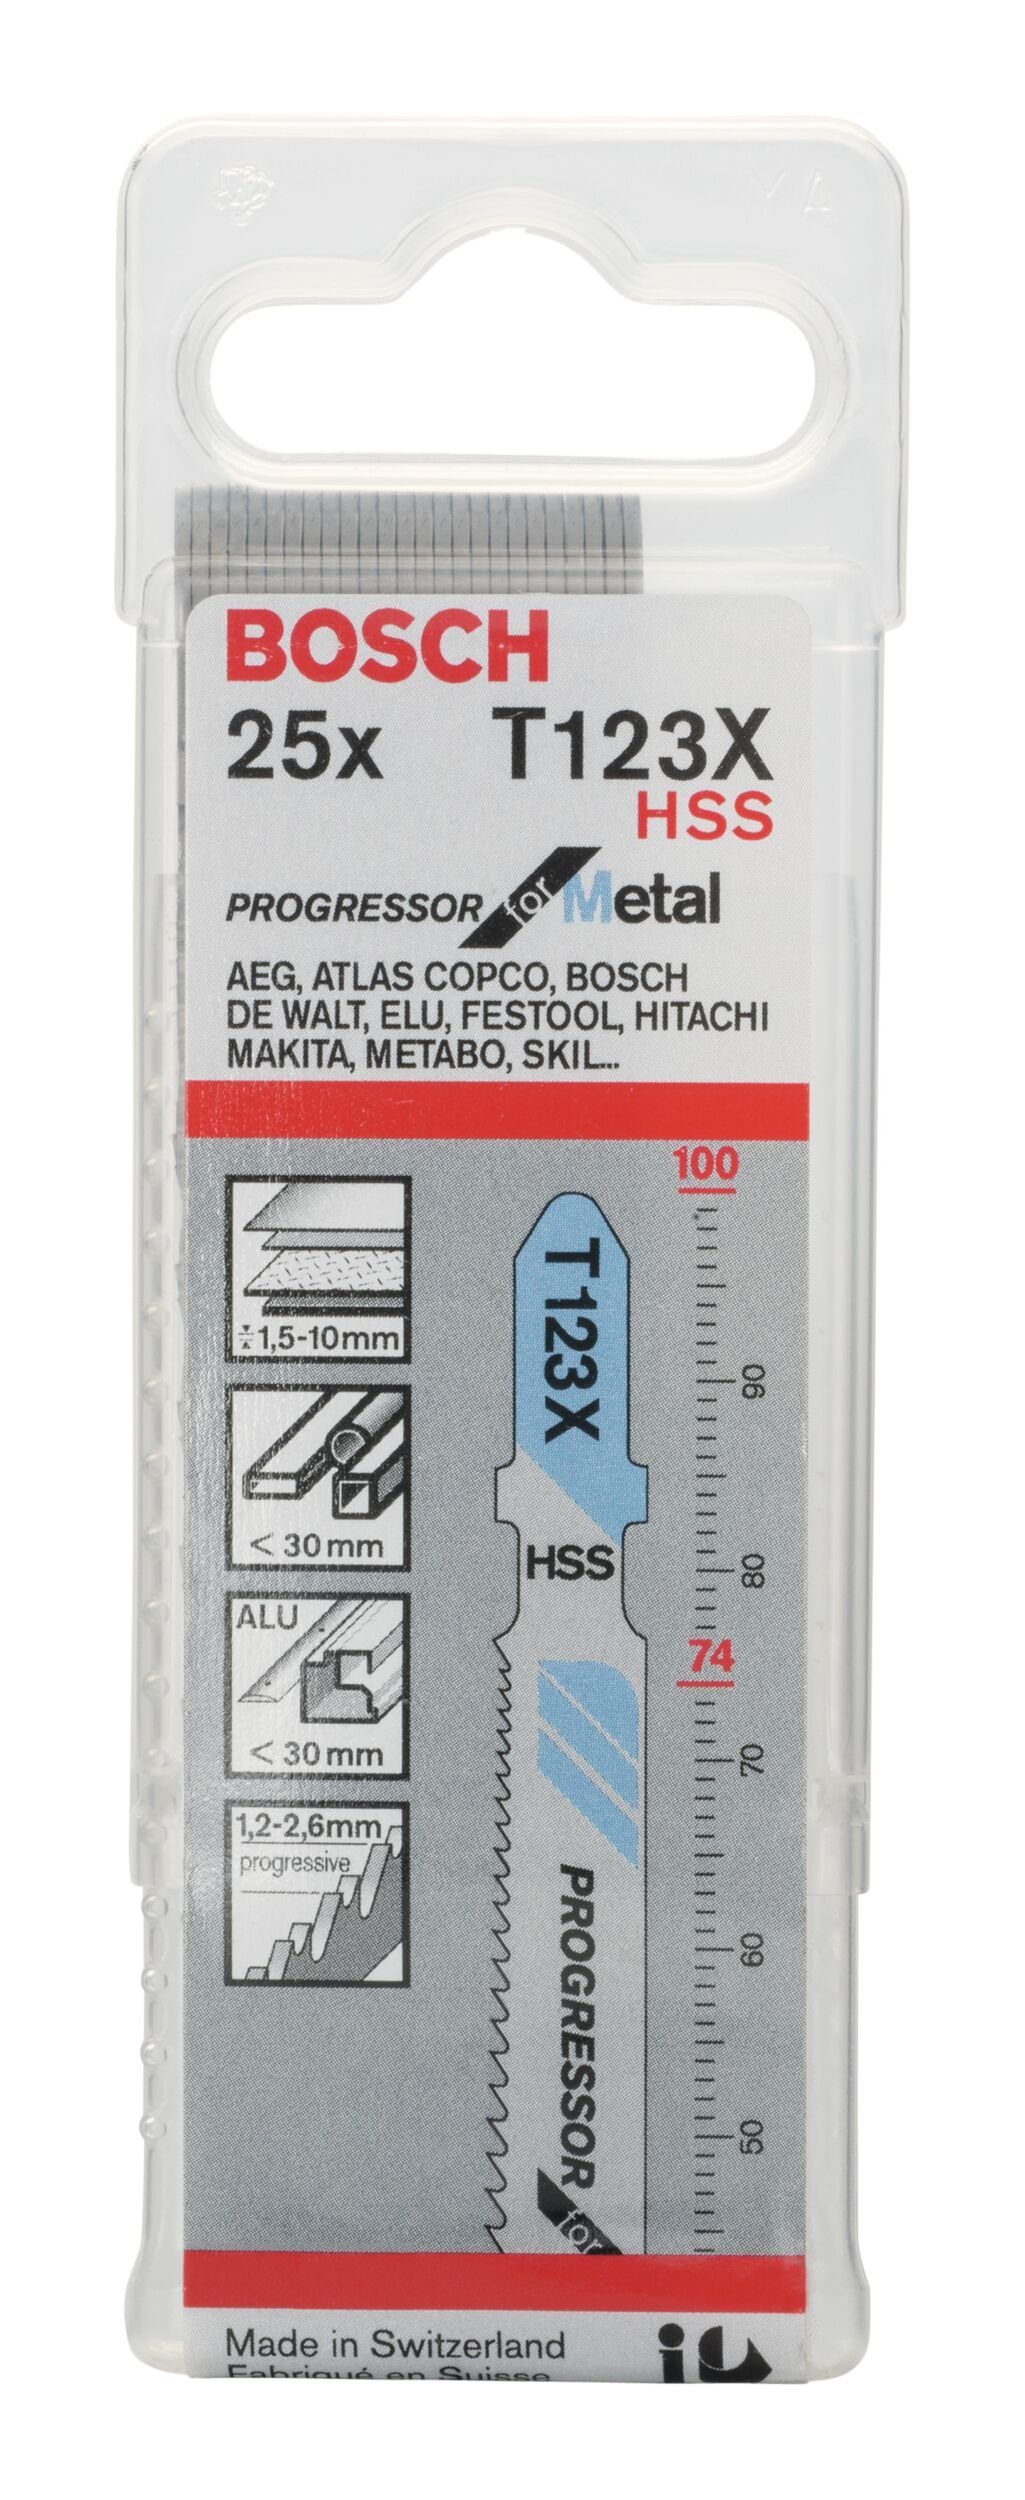 T BOSCH for 25er-Pack Metal Stichsägeblatt Stück), XF Progressor - 123 (25